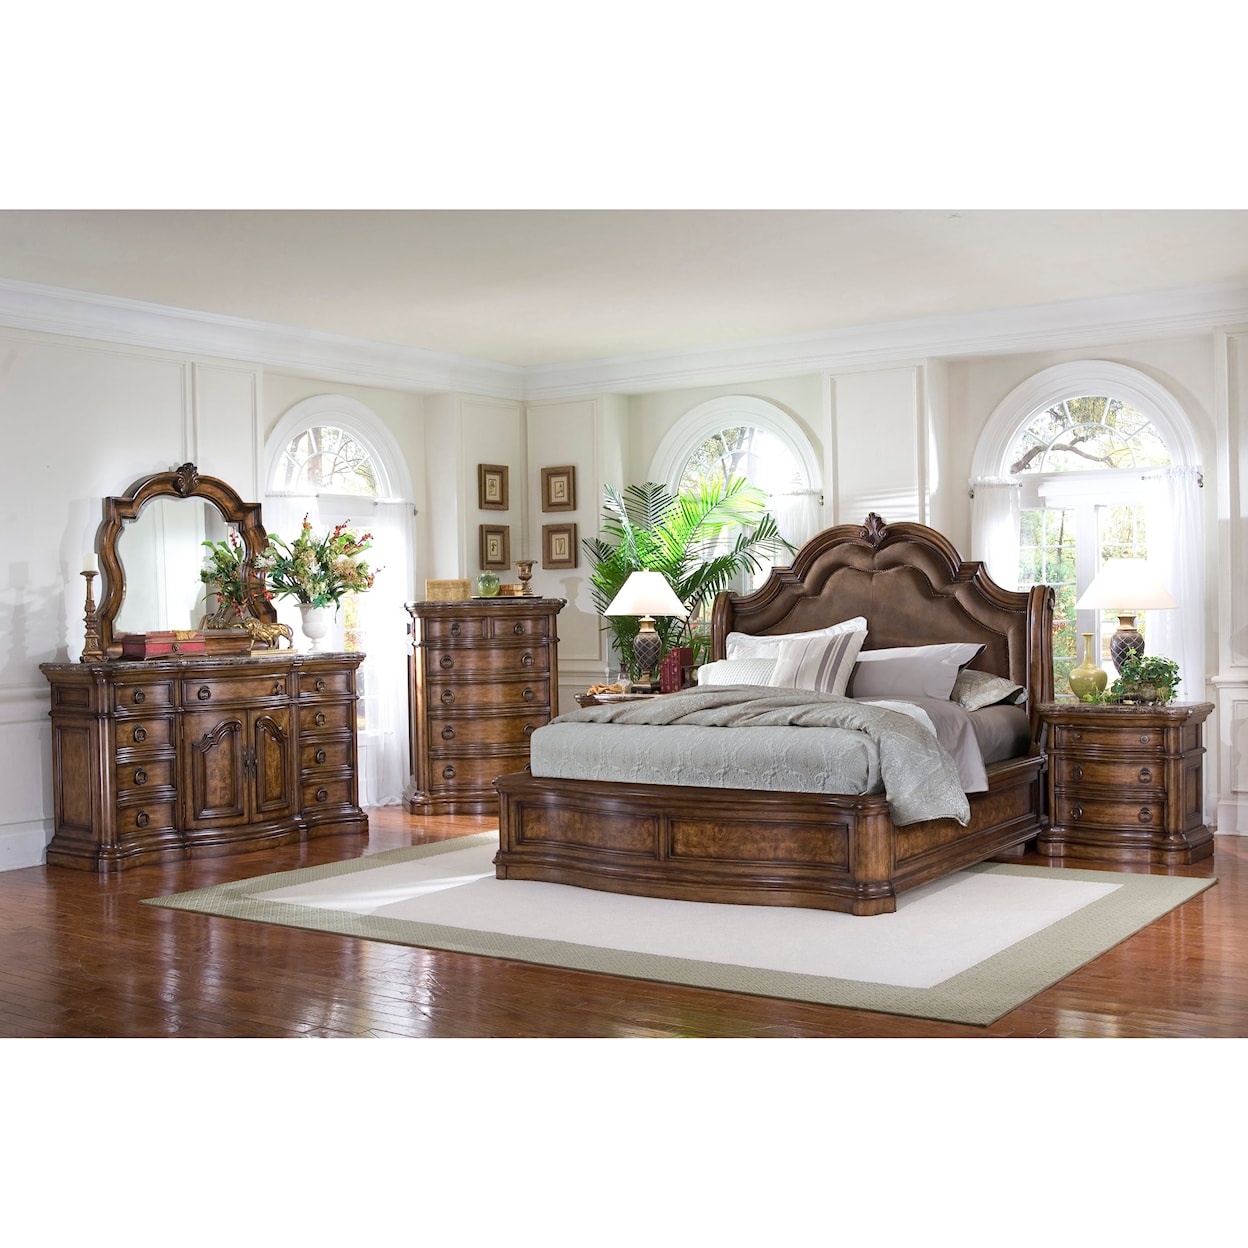 Pulaski Furniture San Mateo Queen Bedroom Set